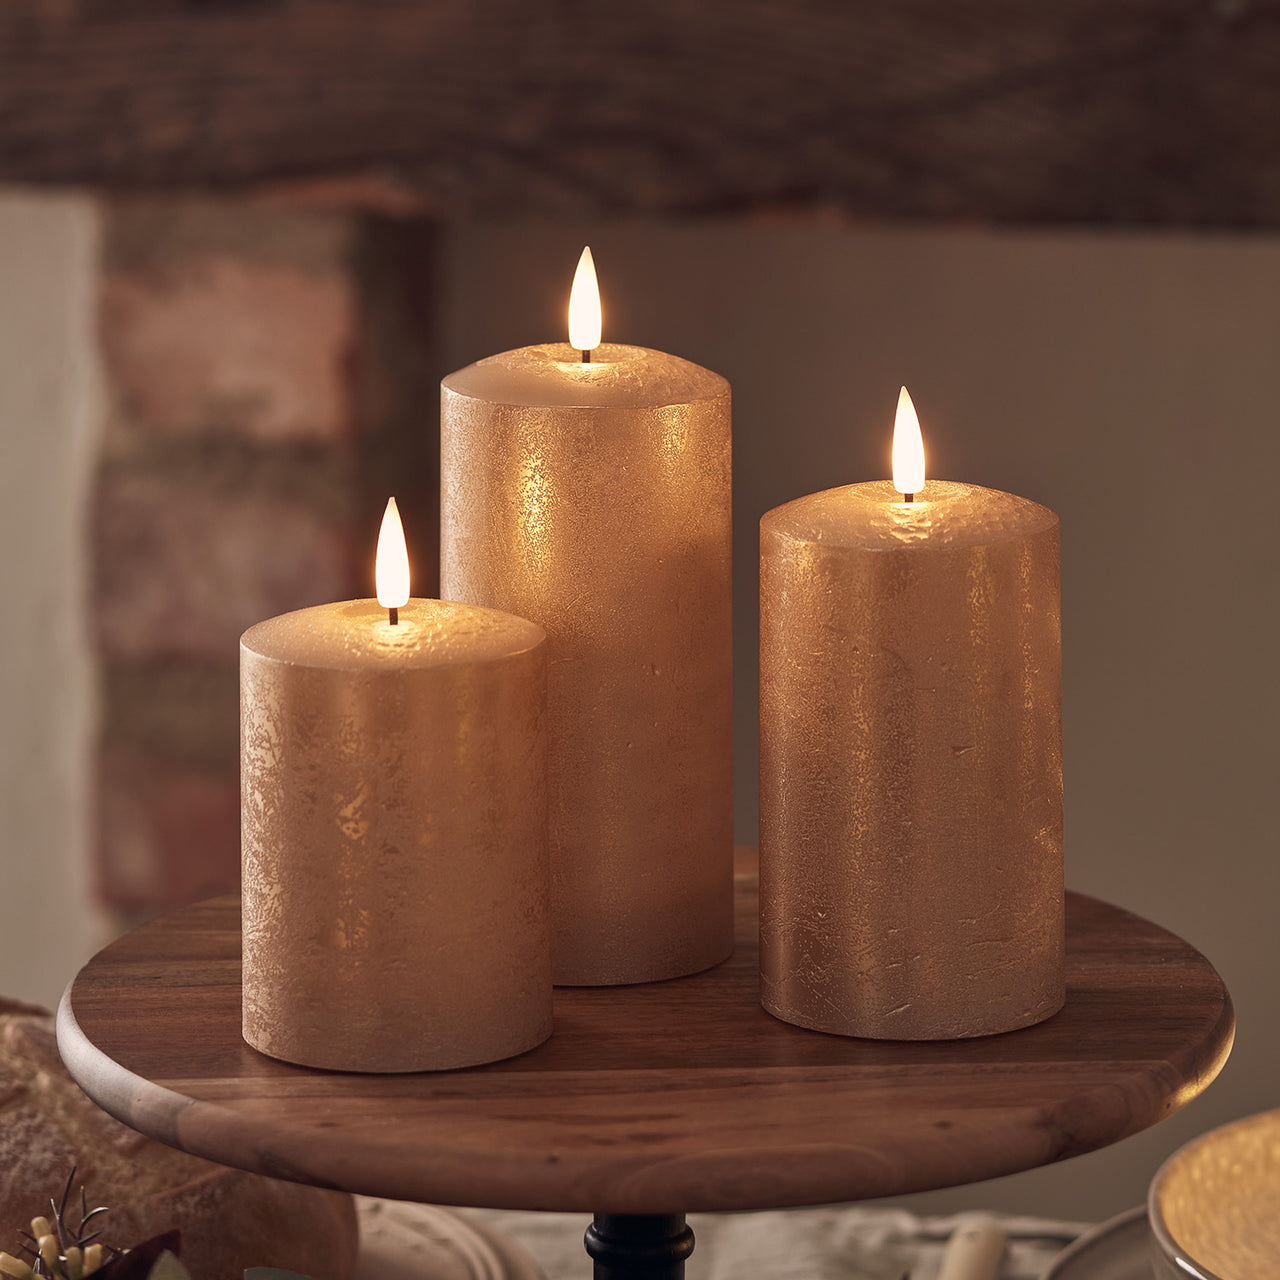 TruGlow® Copper LED Autumn Candle Trio